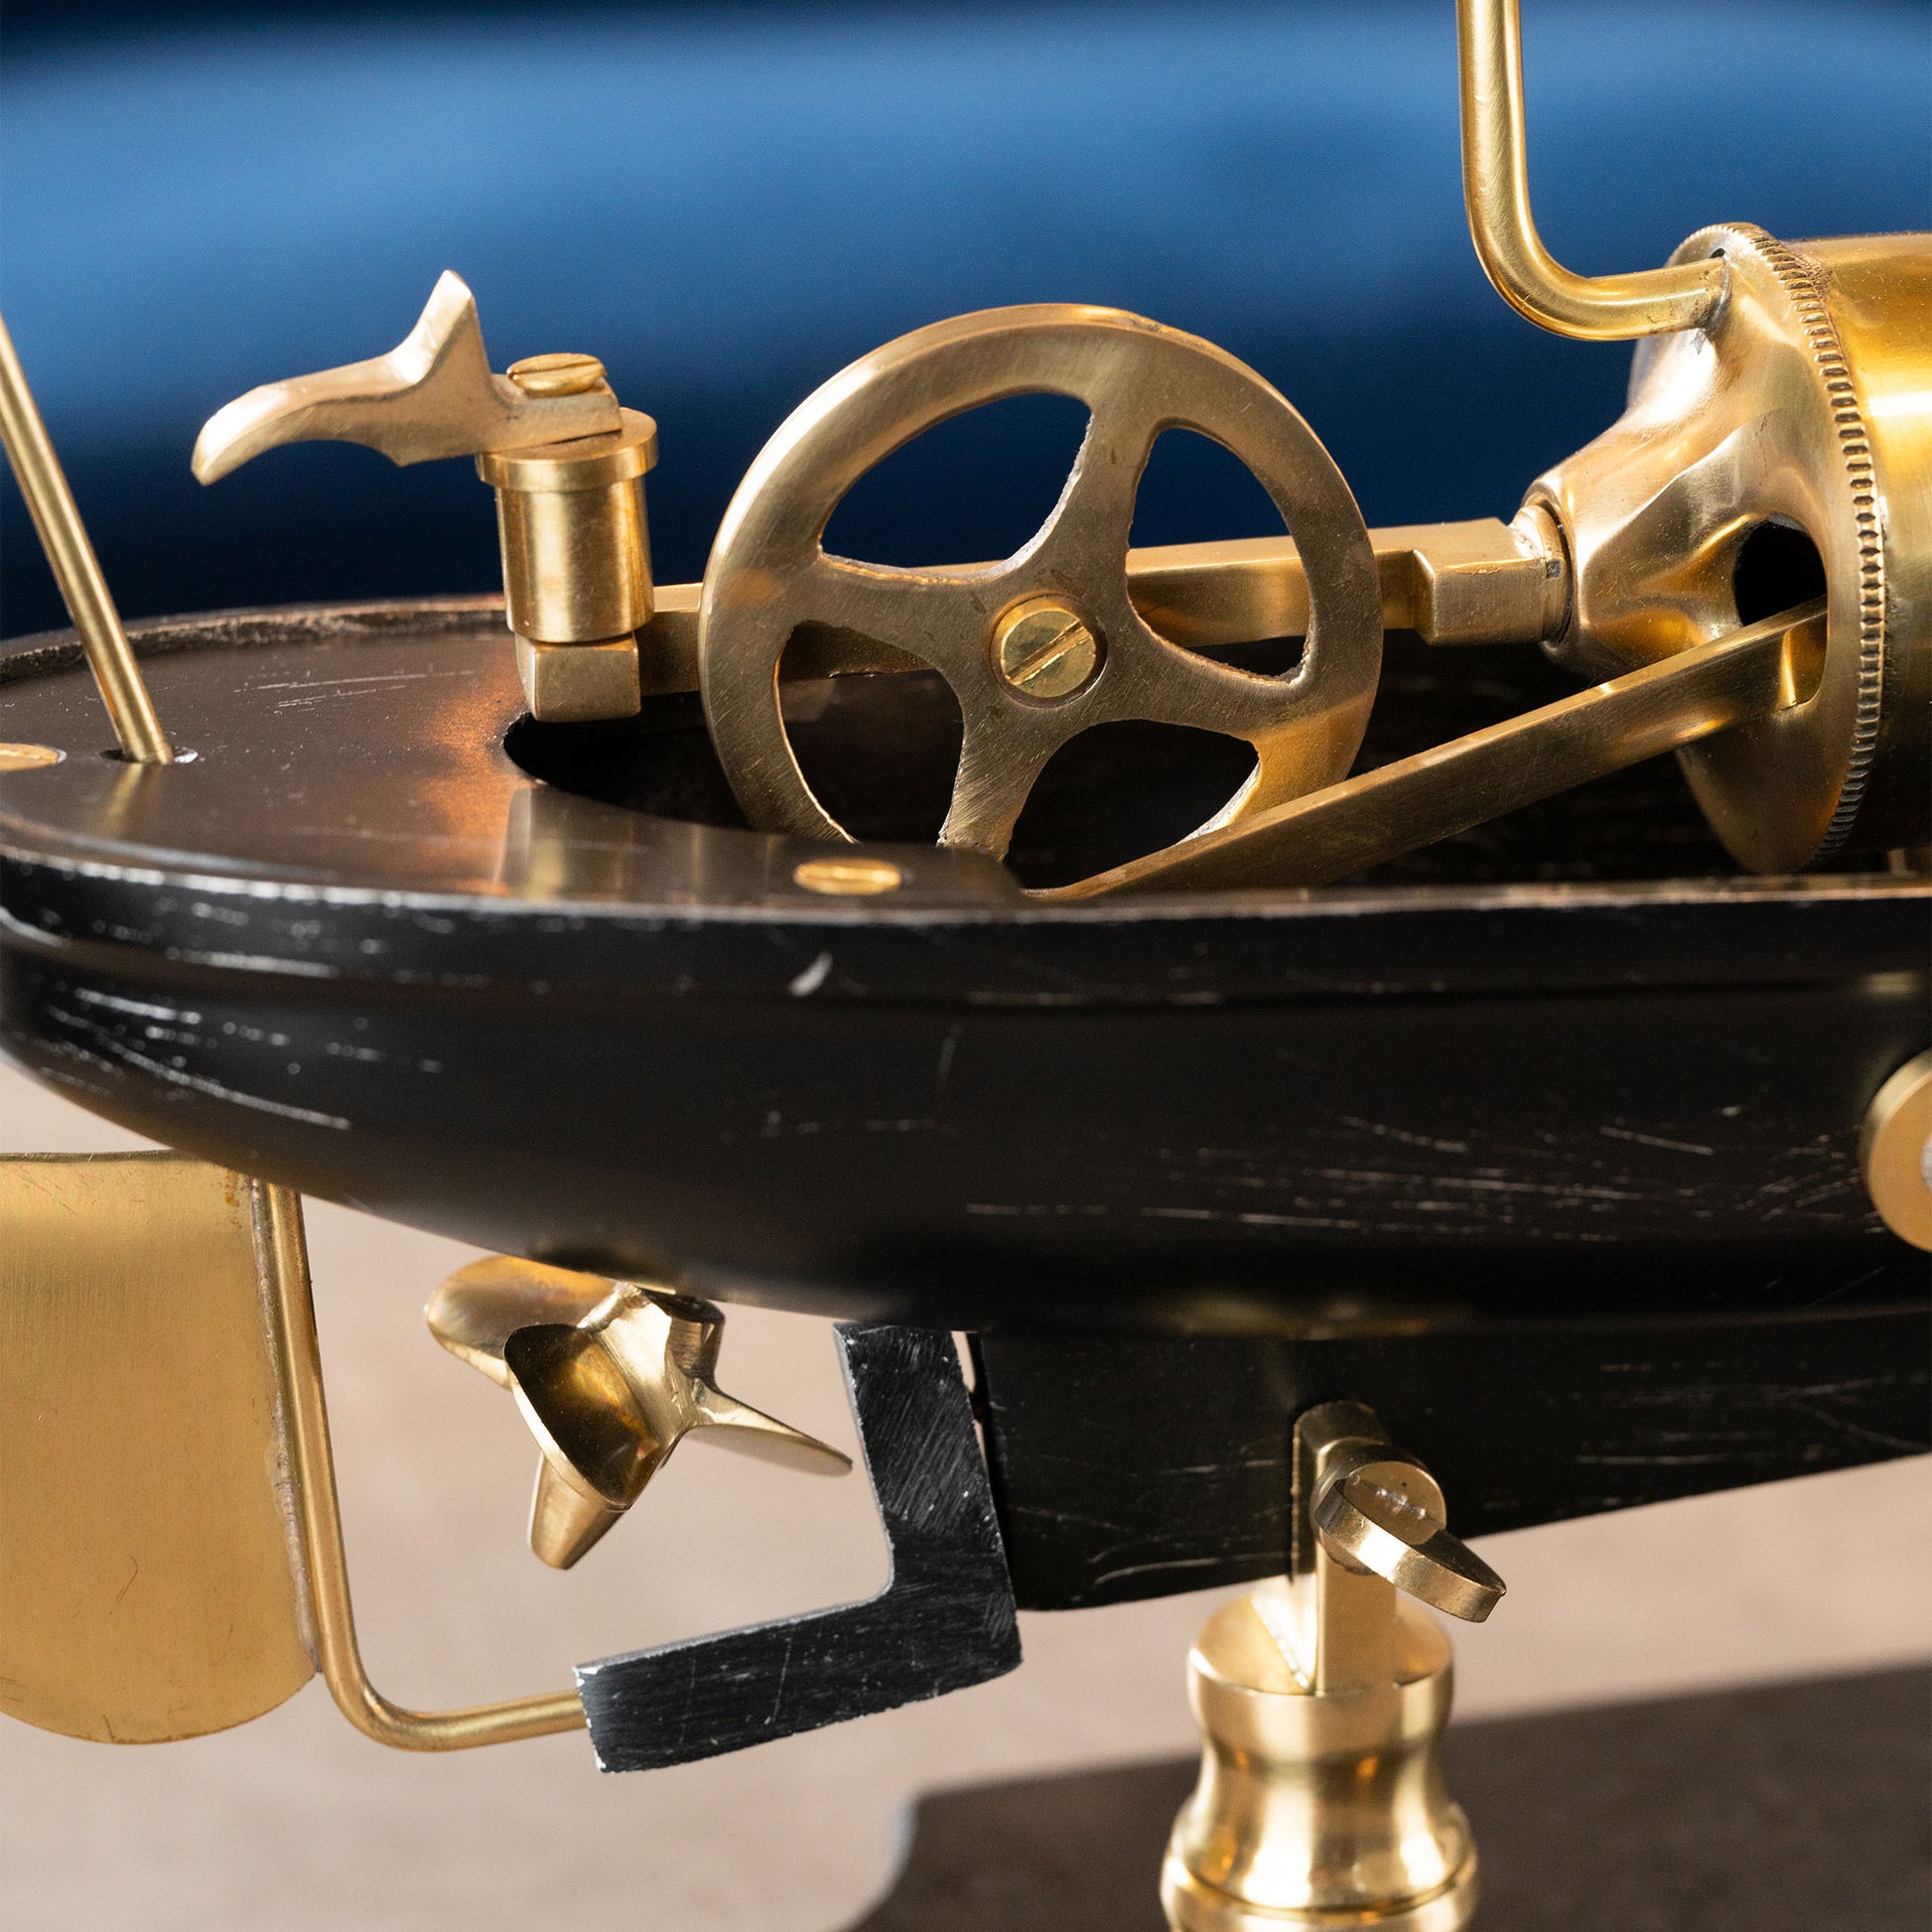 Steam Boat Table Clock